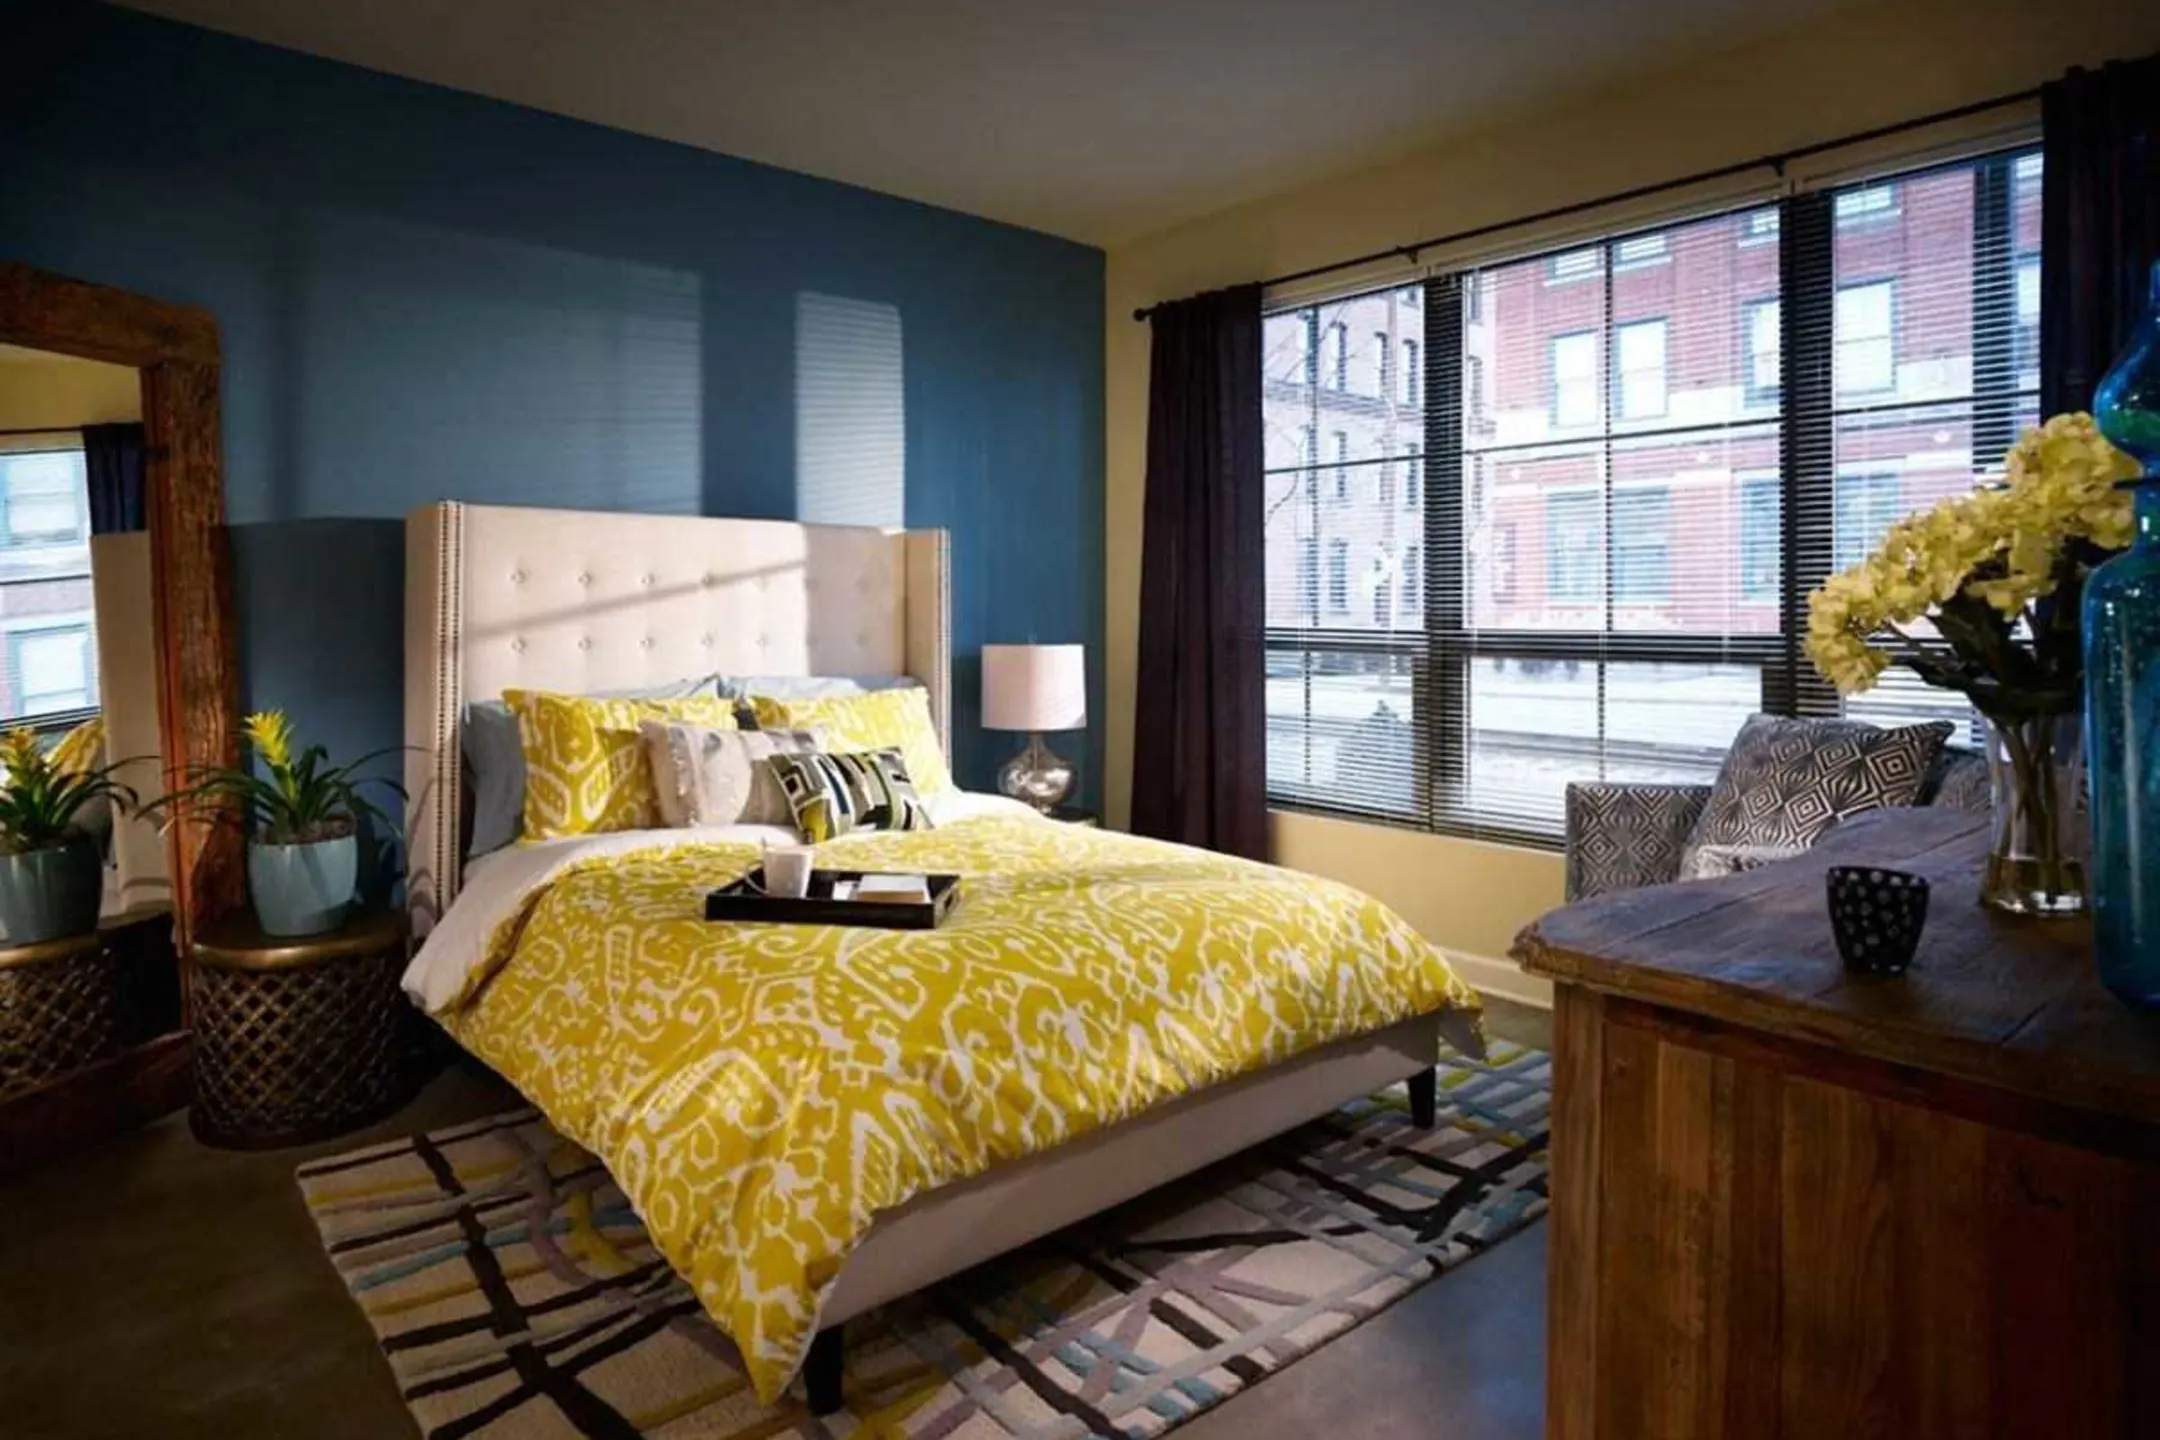 Bedroom - Lot 24 - Pittsburgh, PA